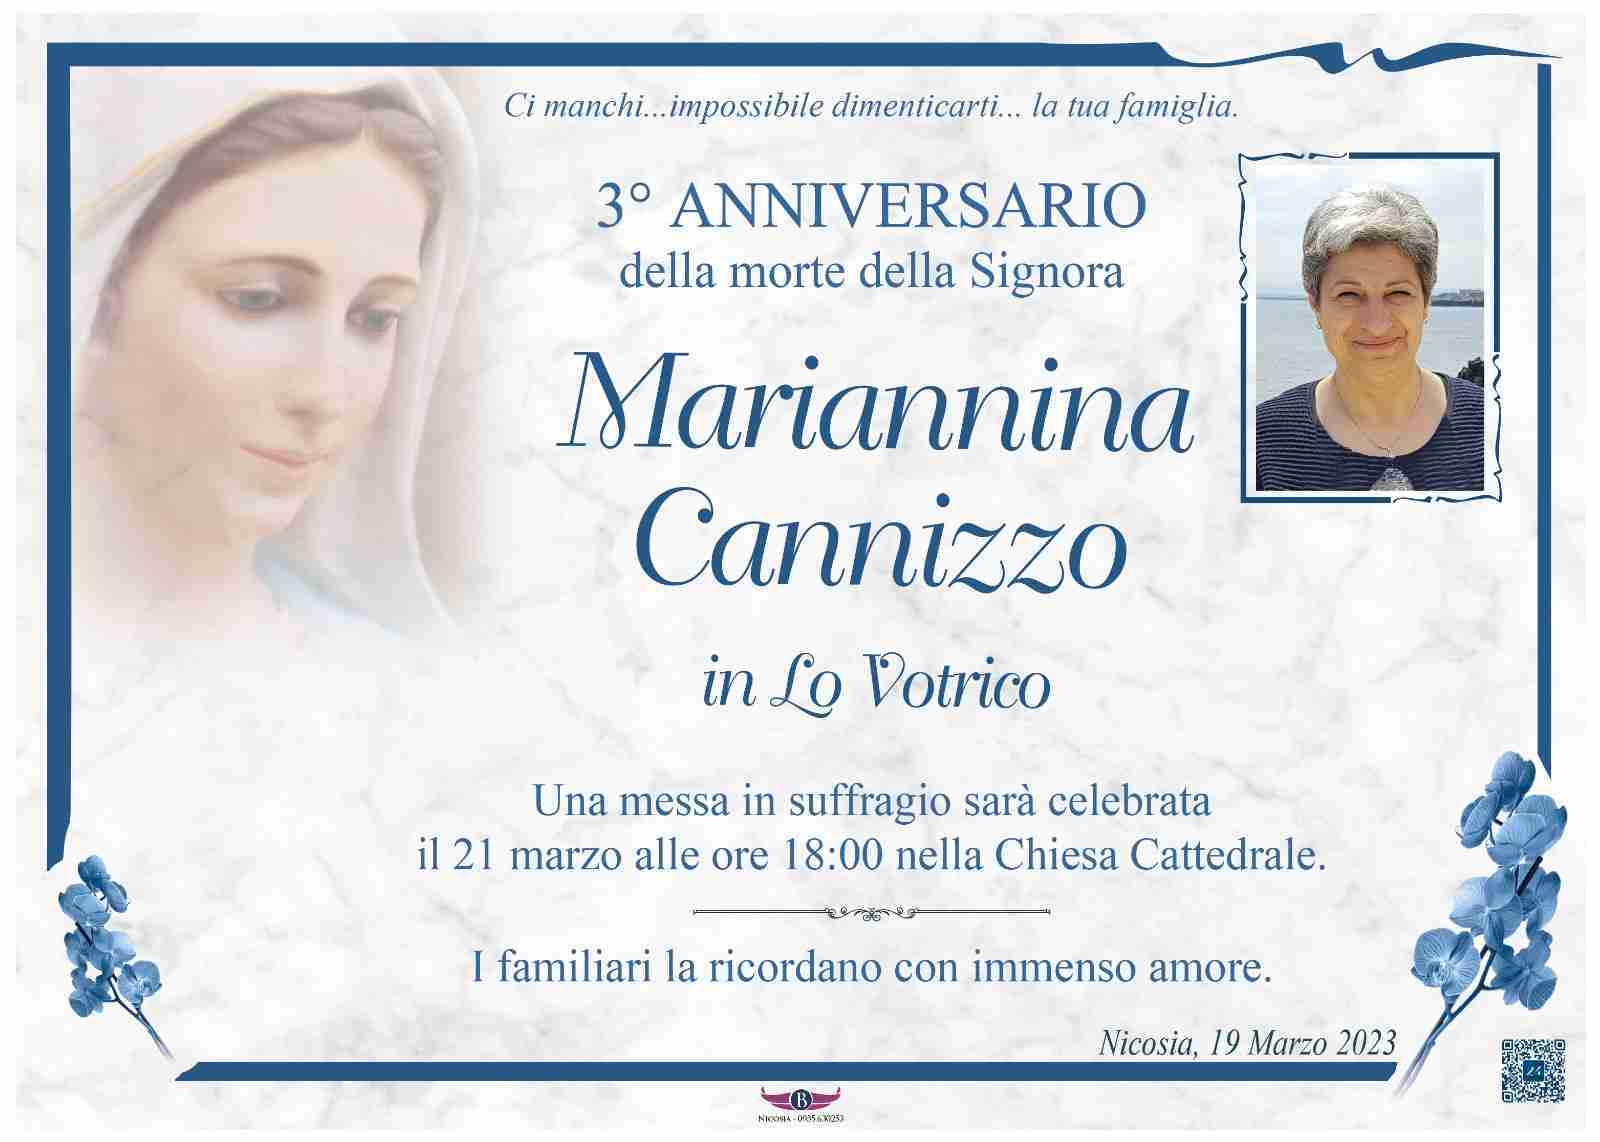 Mariannina Cannizzo